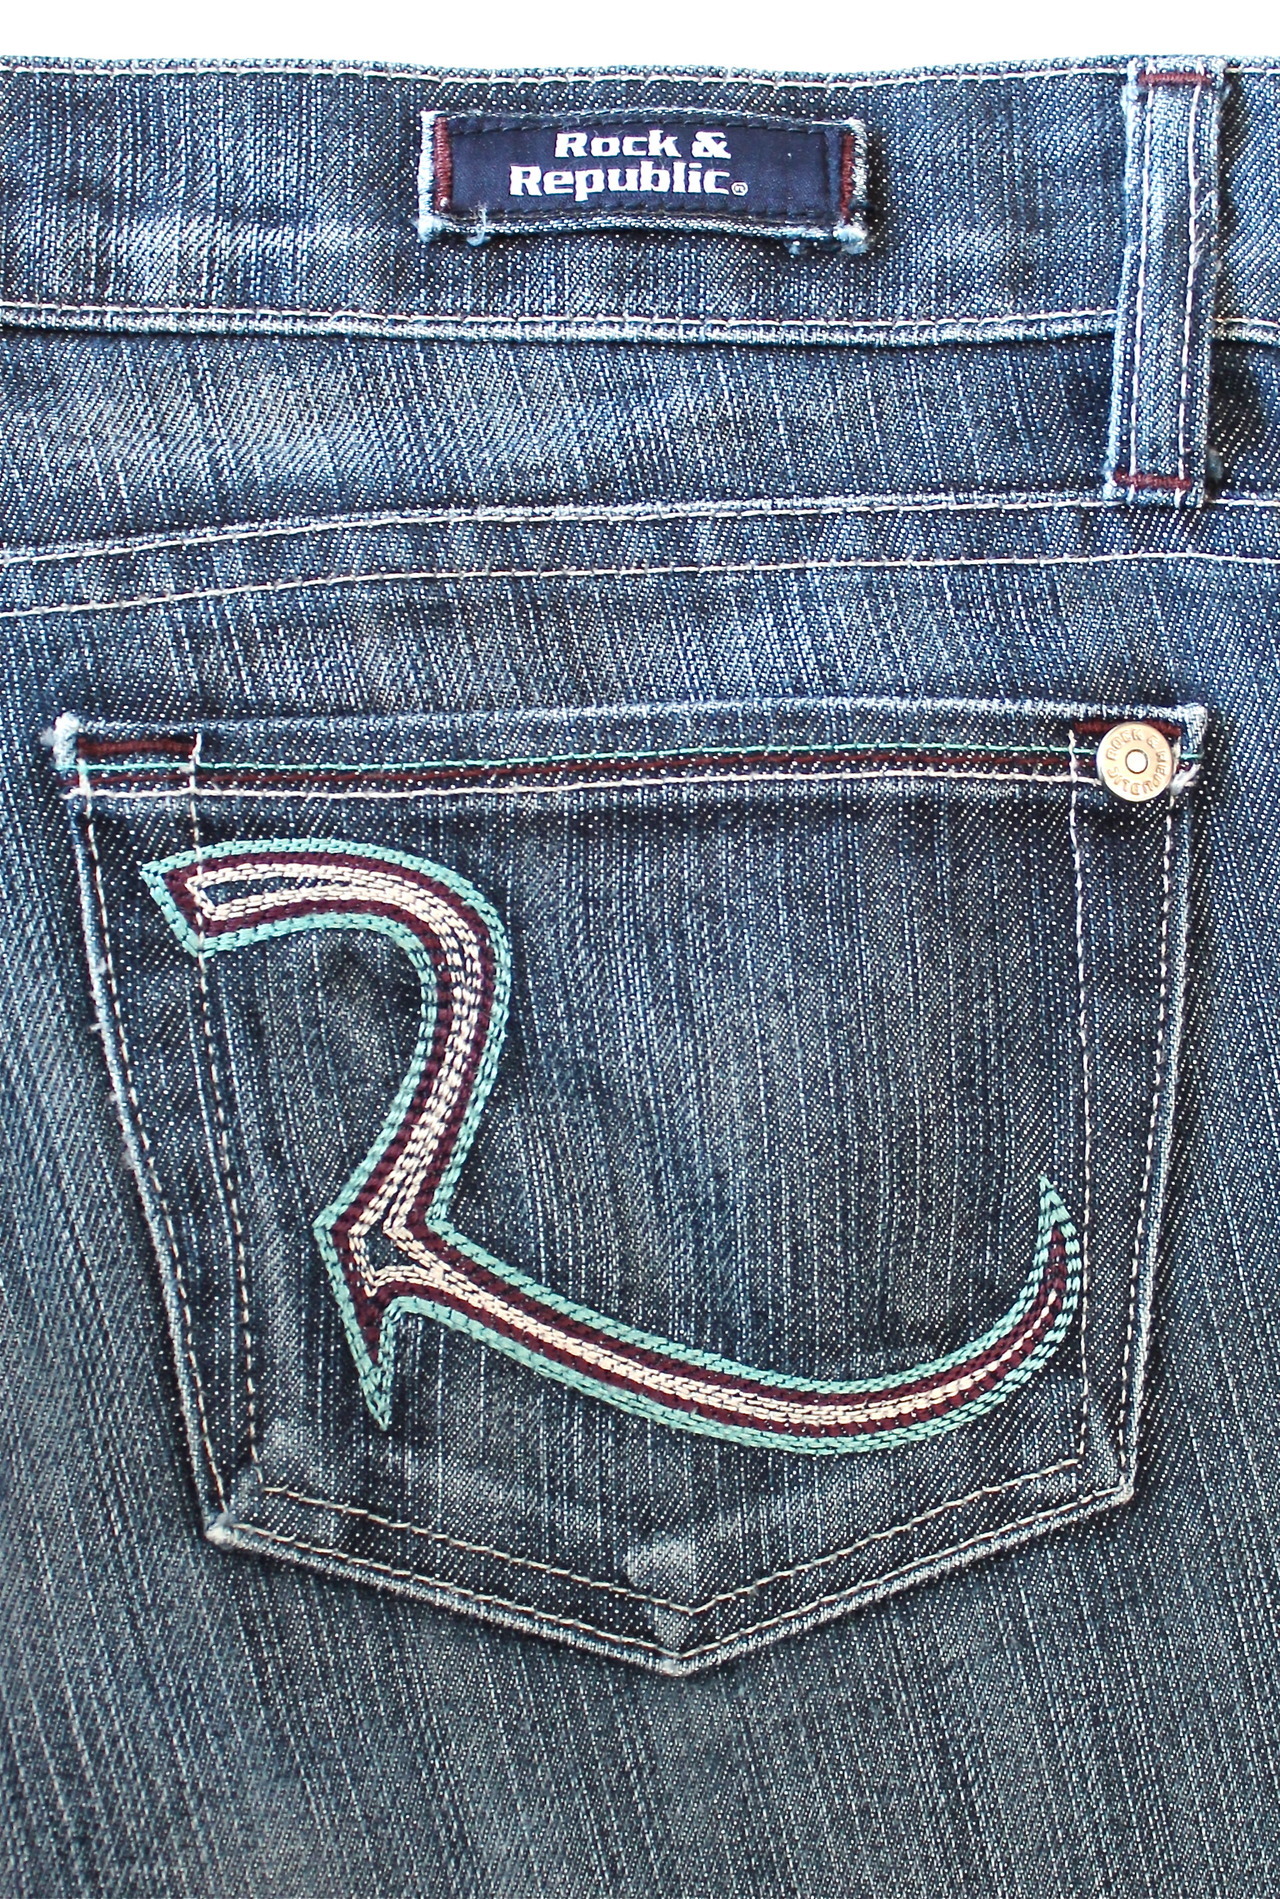 Size 00 Jeans Tumblr